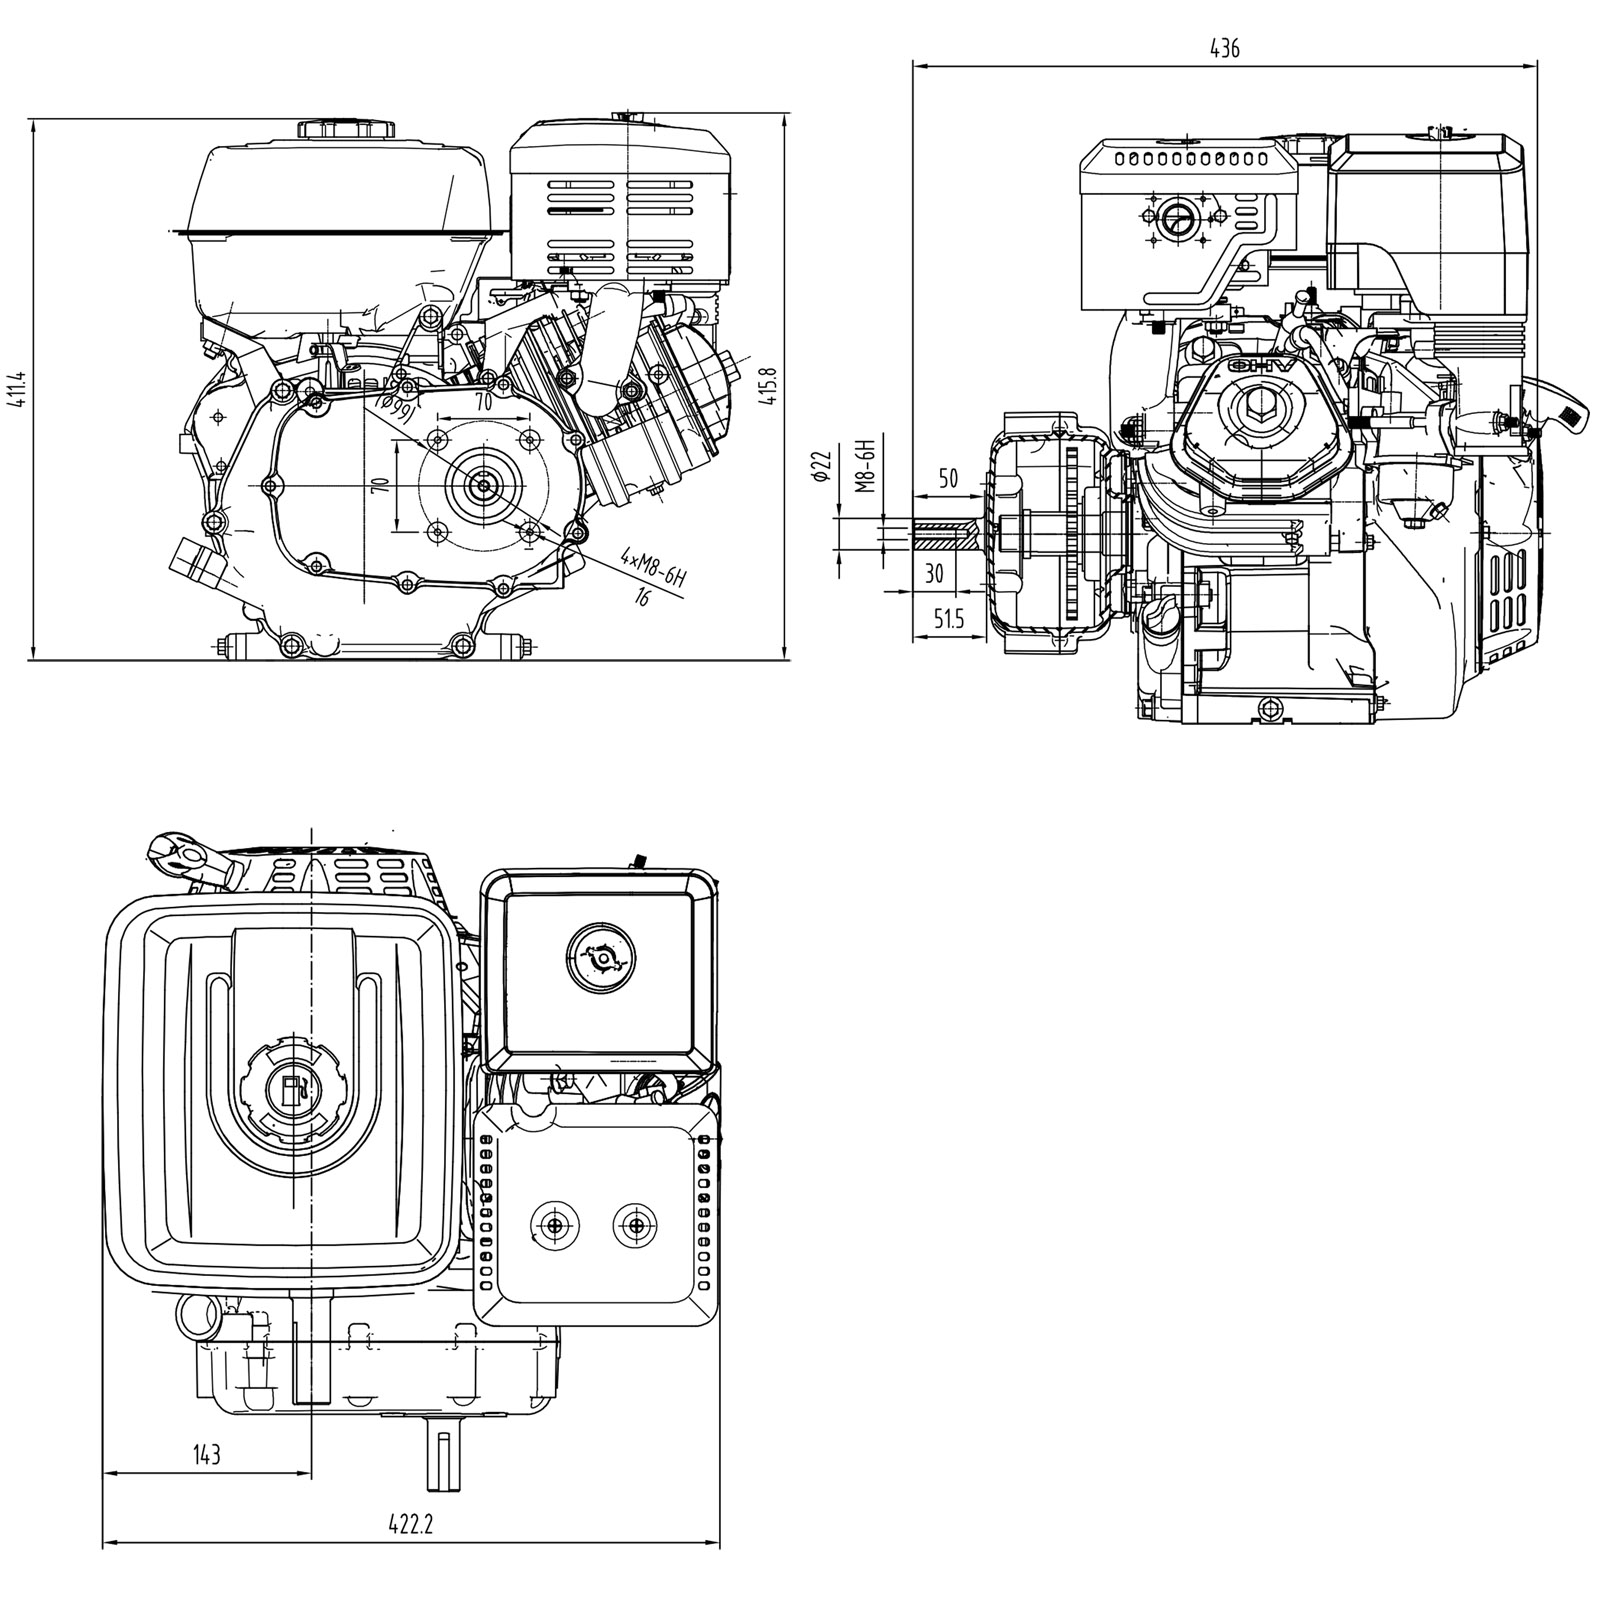 XPOtool GK270 Gasoline Engine 5kW (9hp) Wet Clutch Reversing Starter